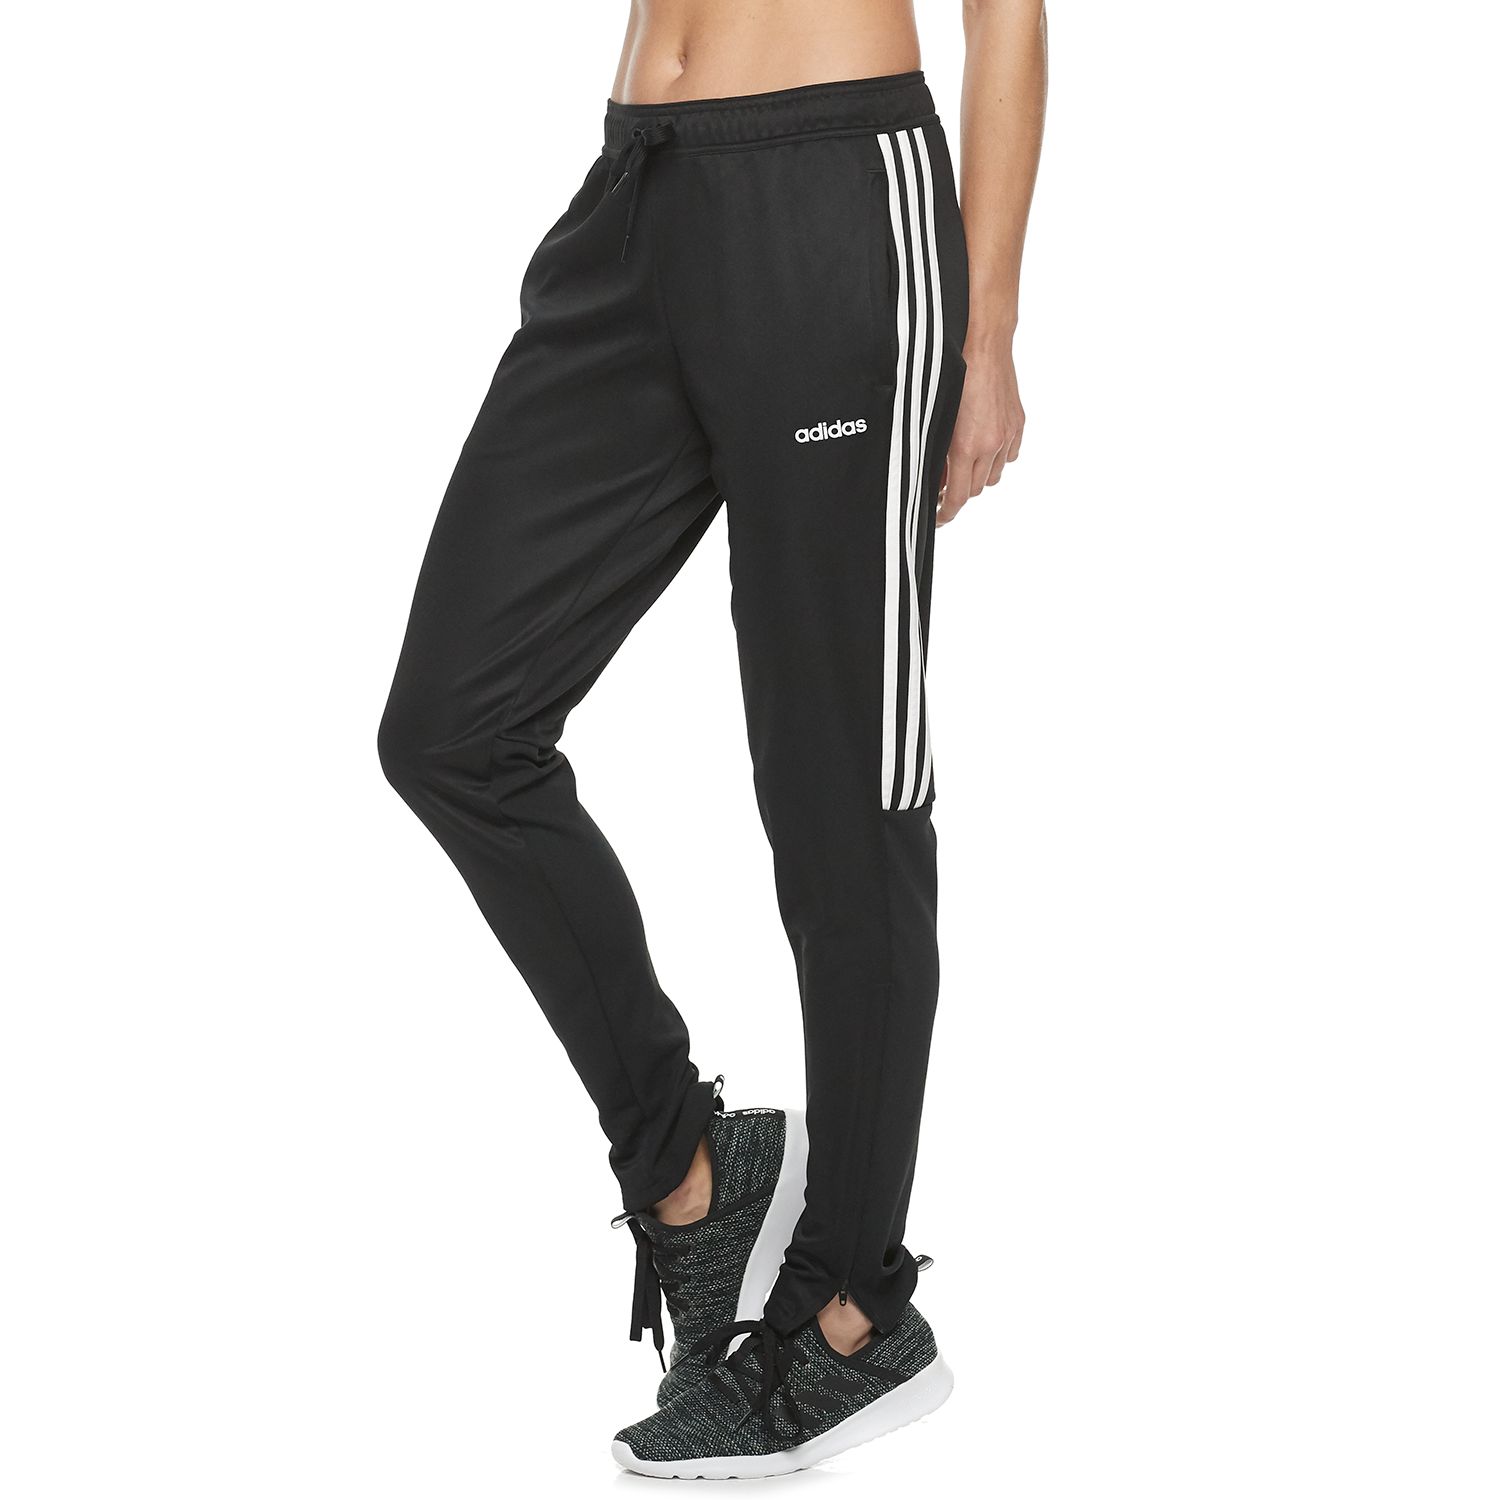 adidas women's workout pants